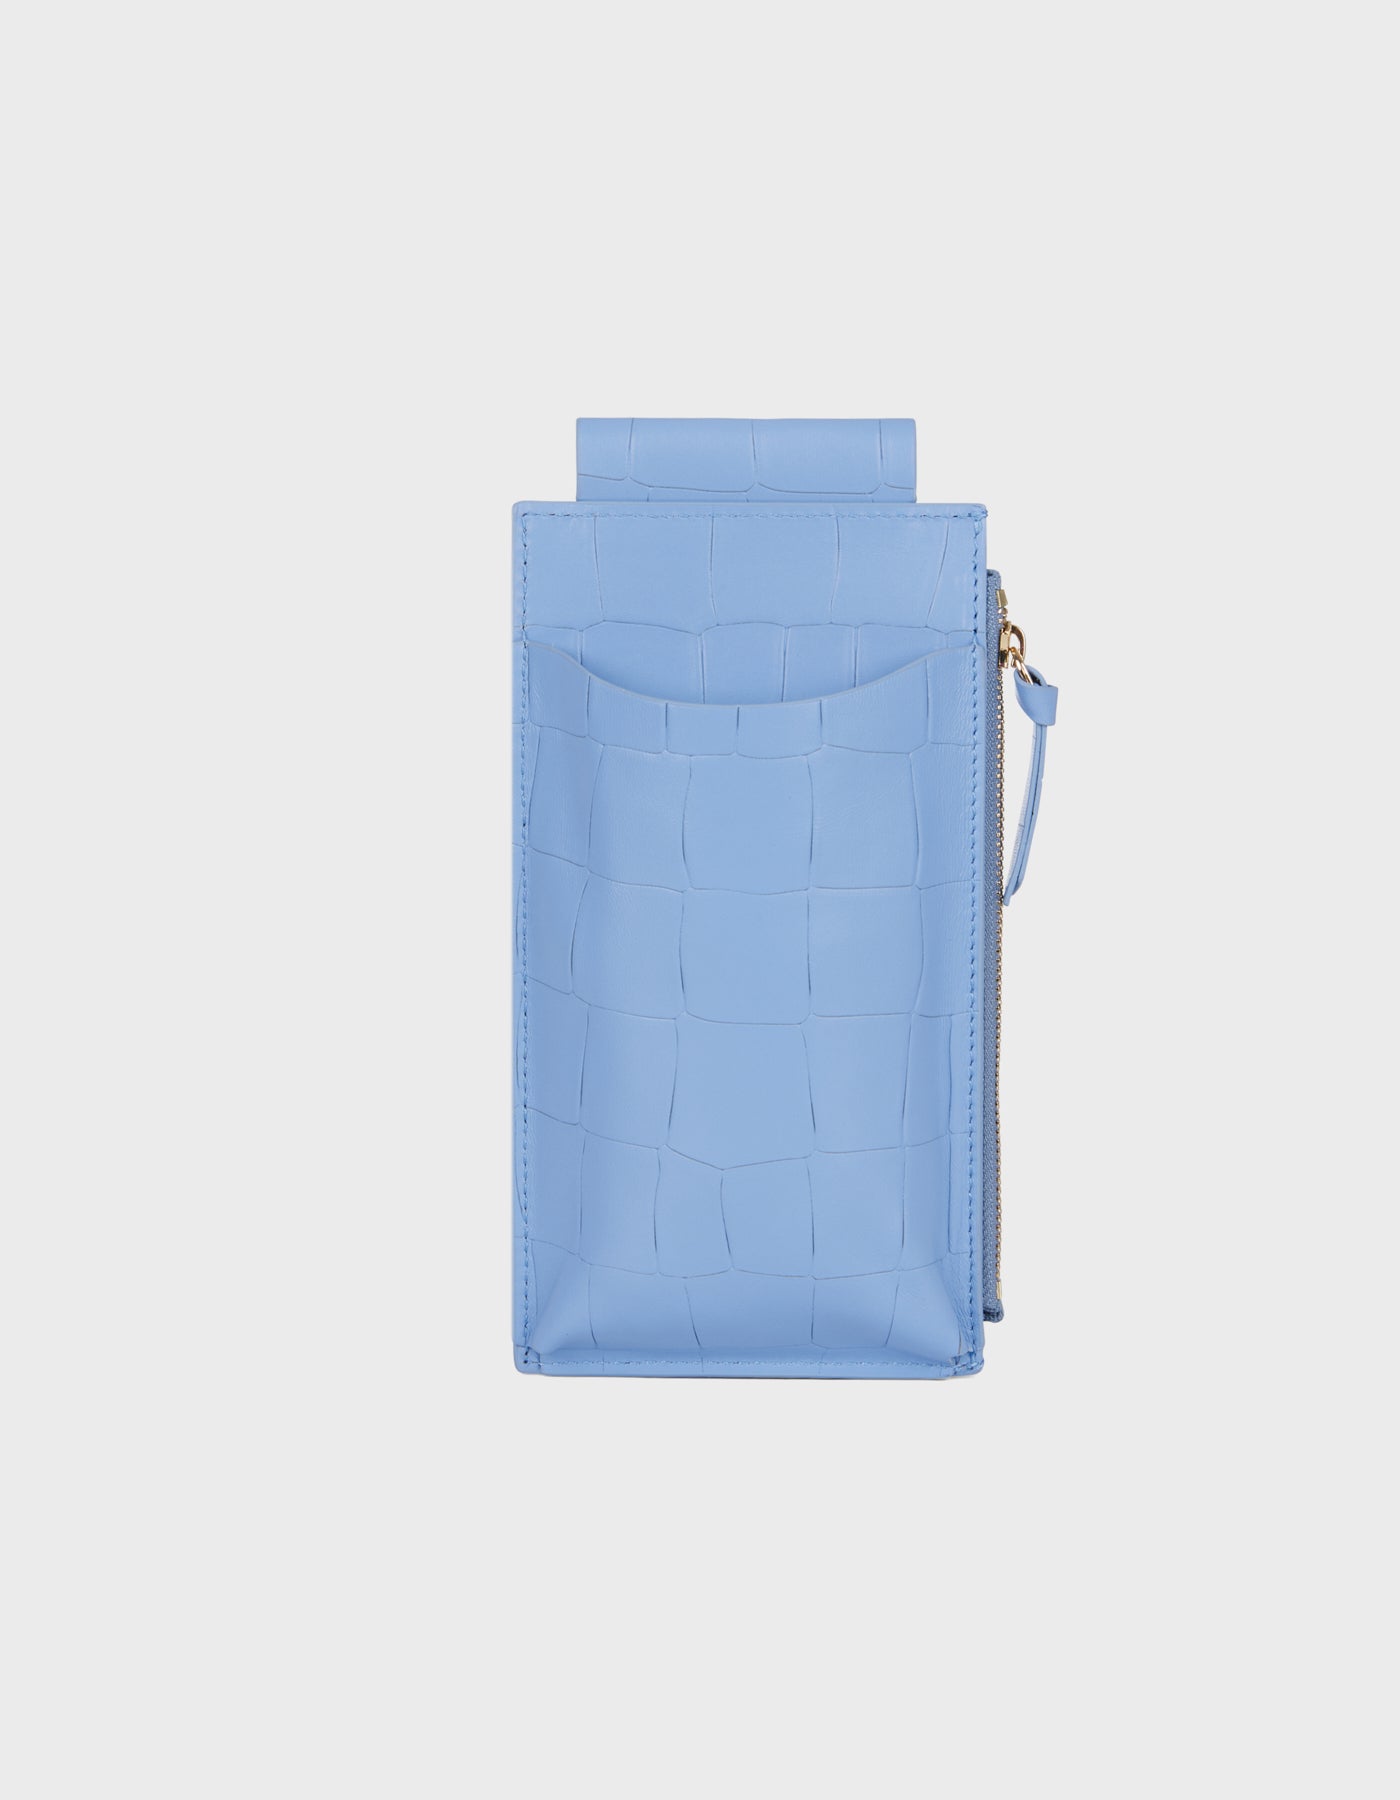 HiVa Atelier - Crossbody Phone Bag Croco Effect Tranquil Blue